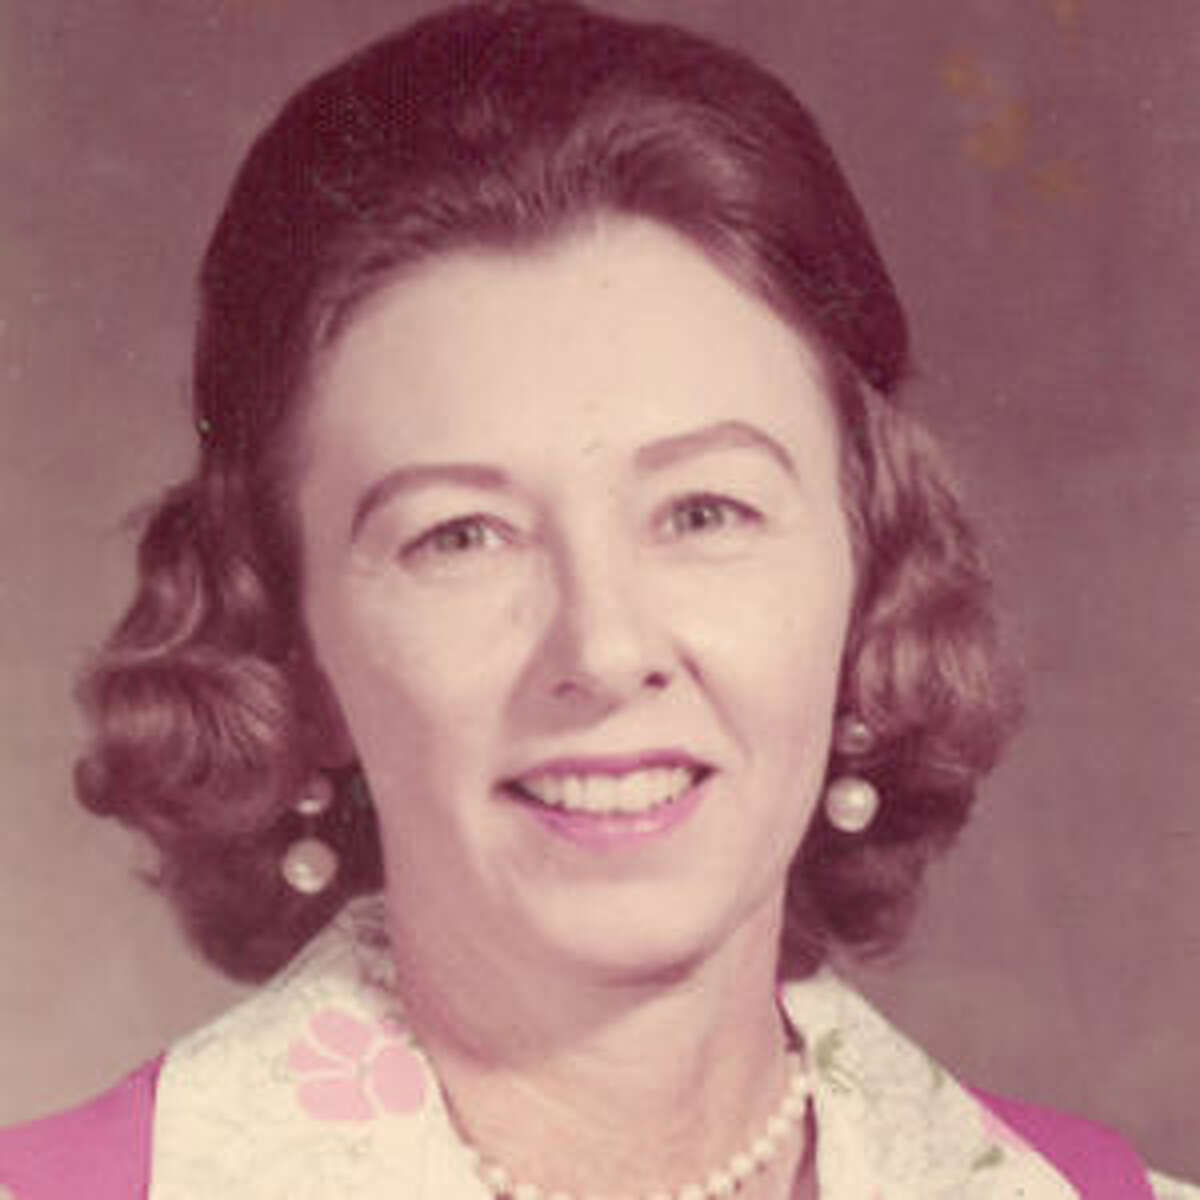 Mary Jo Meyer, Burbank High School’s longtime secretary, died Feb. 18 at 85.